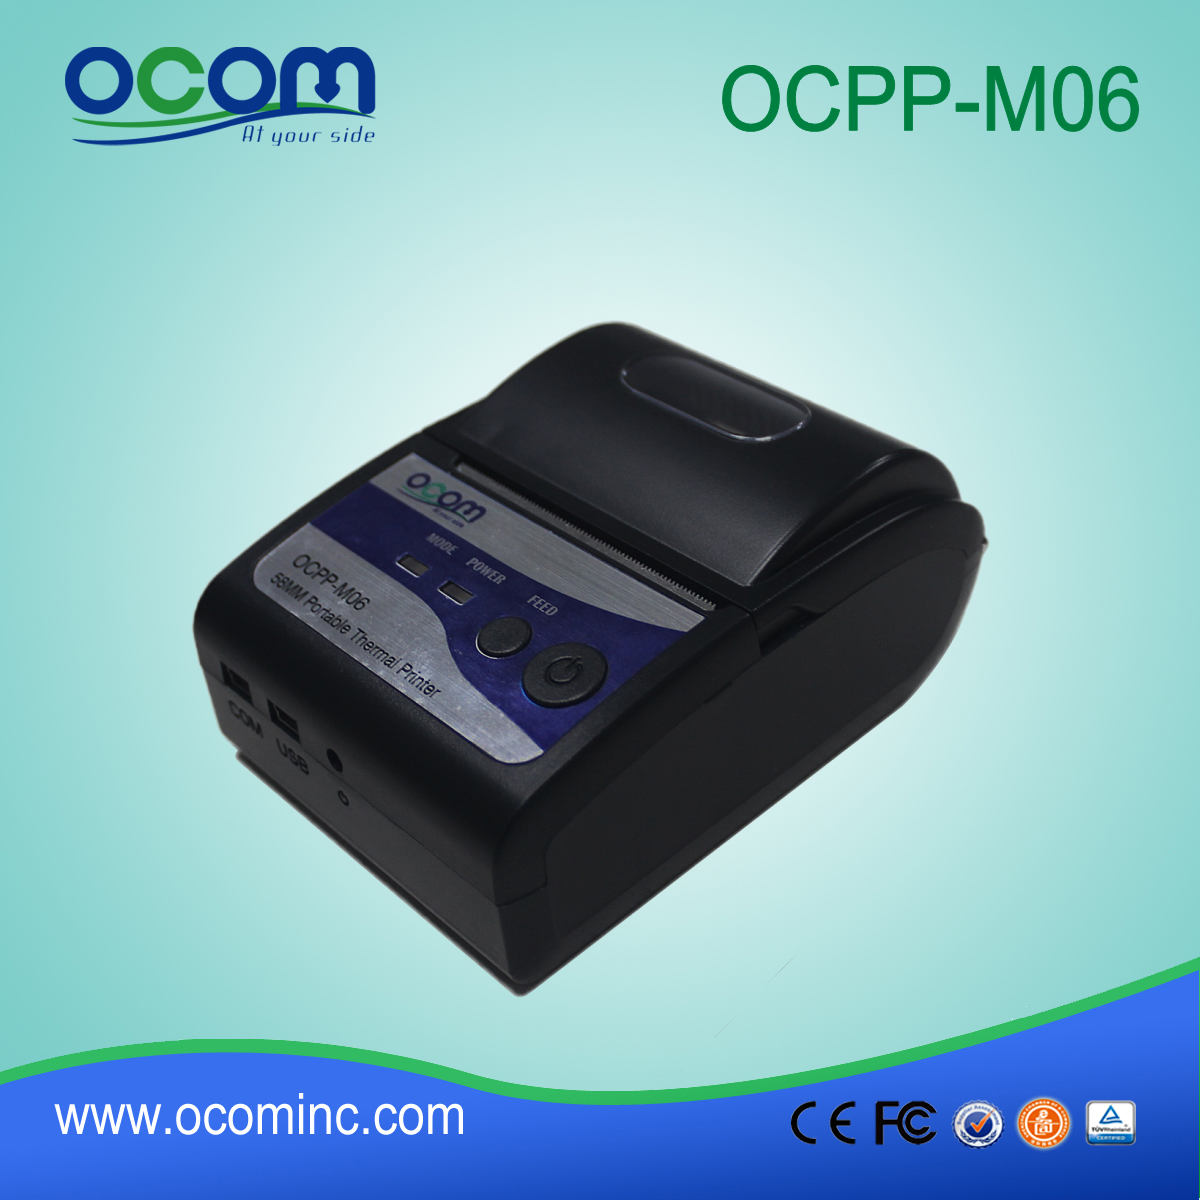 OCPP-M06: Chinesische cheap OCOM 58mm Positions-Drucker, Kassendrucker 58mm